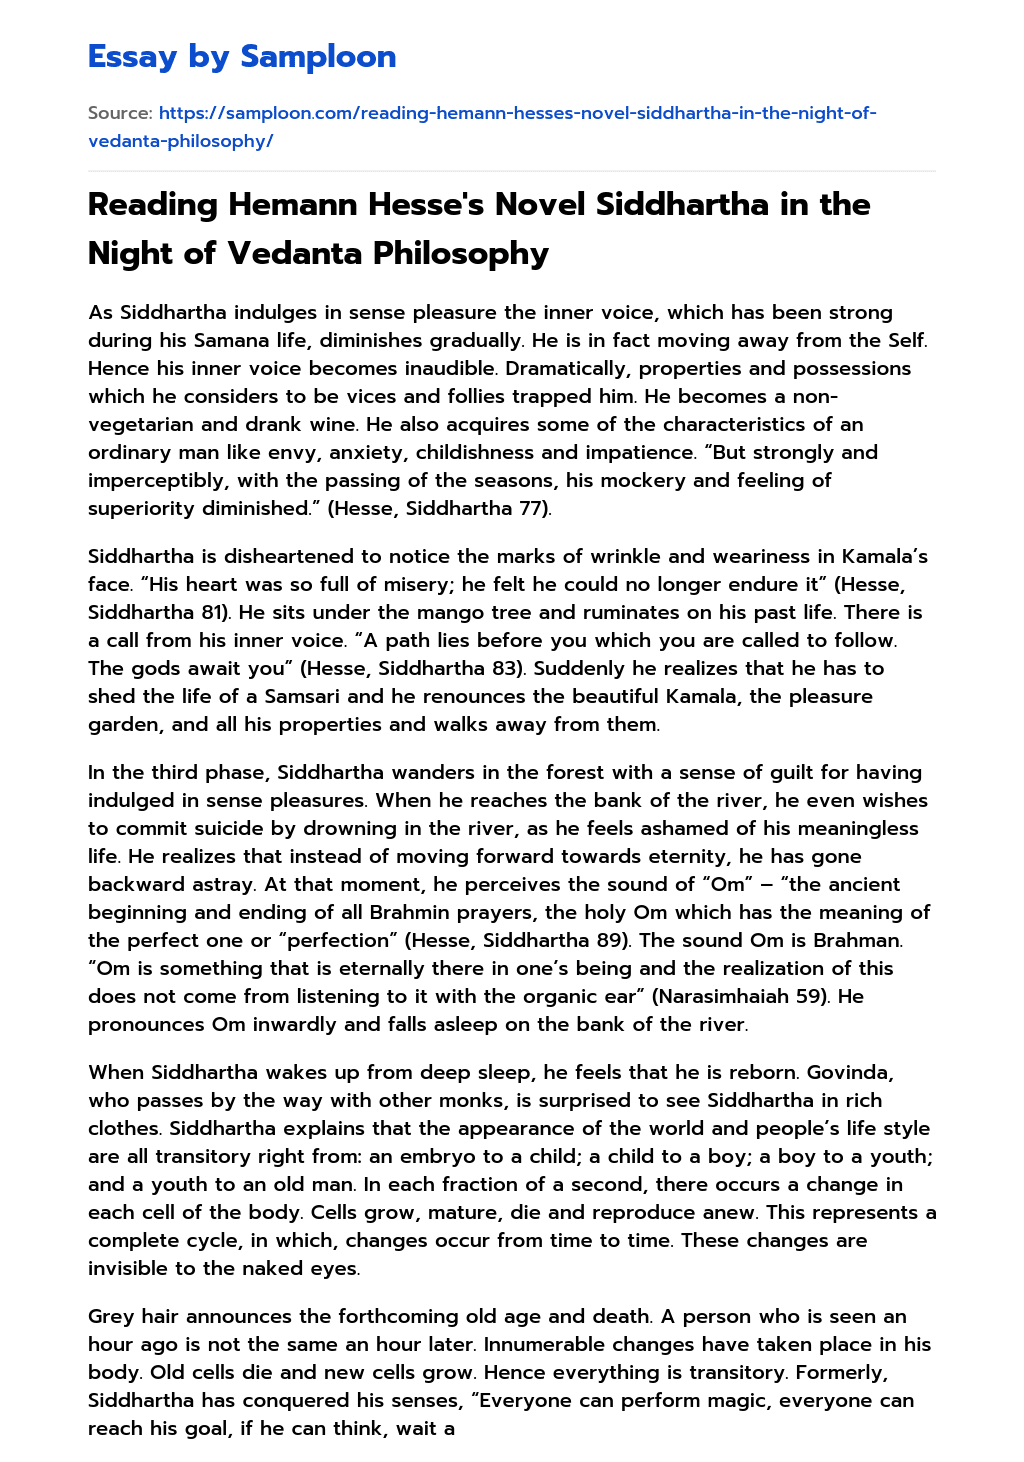 Reading Hemann Hesse’s Novel Siddhartha in the Night of Vedanta Philosophy  essay